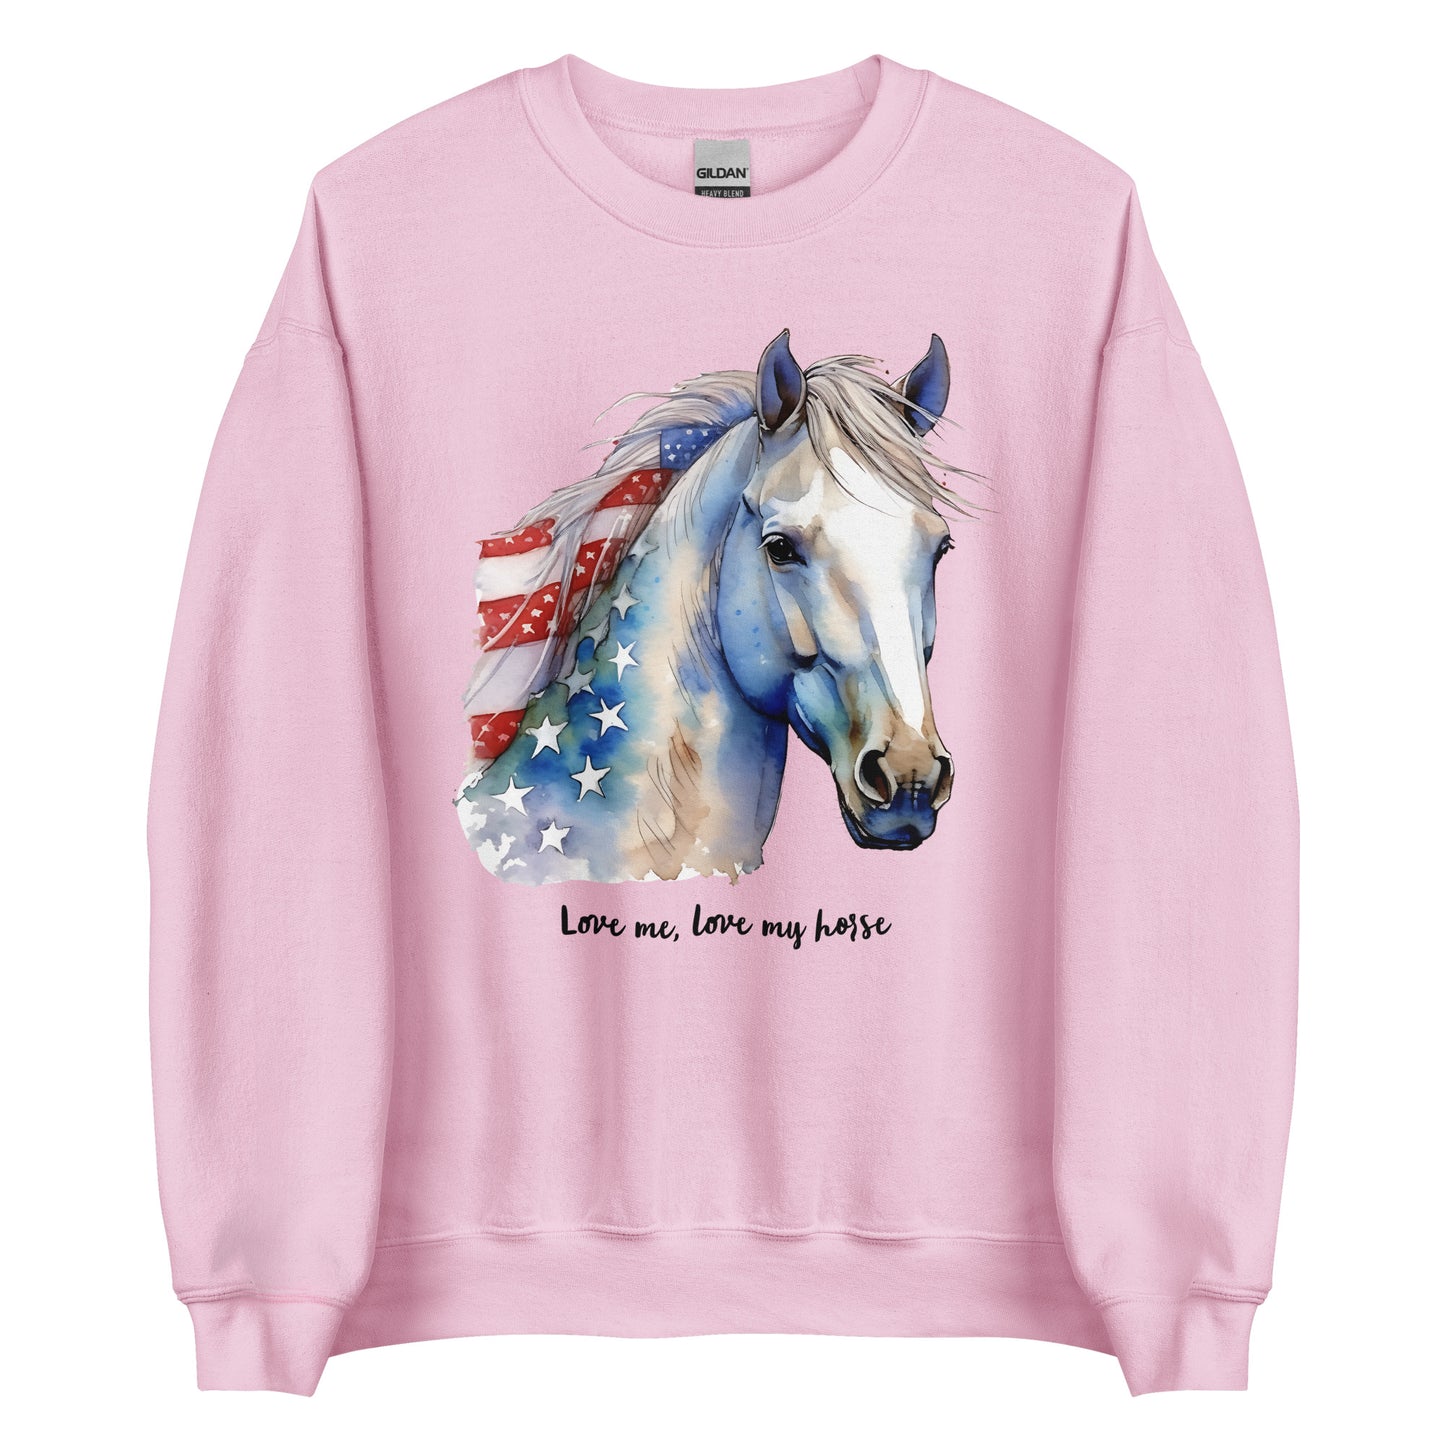 Pink Patriotic Horse Sweatshirt With Blue Horse